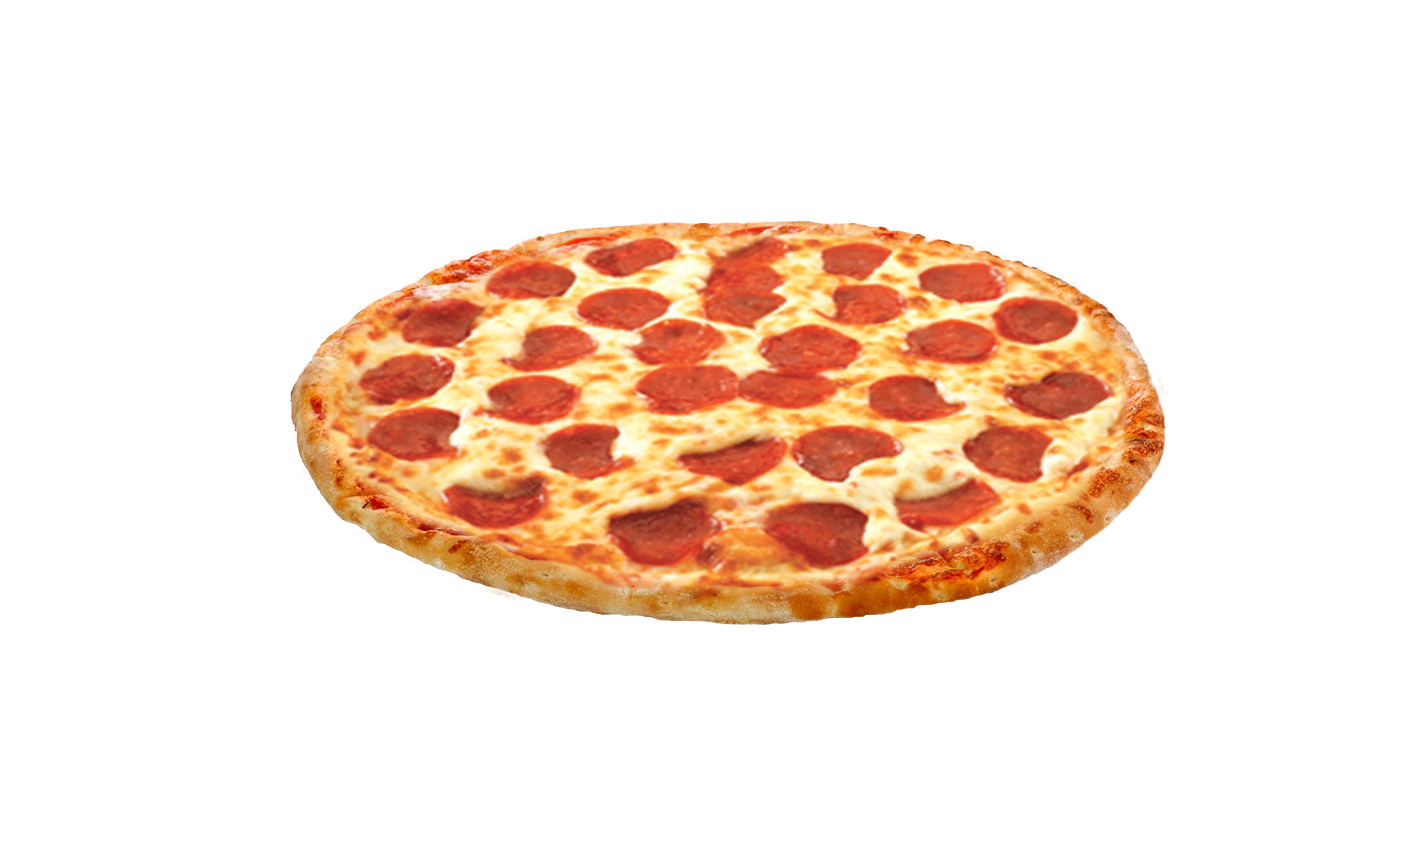 пепперони пицца фото на белом фоне фото 24